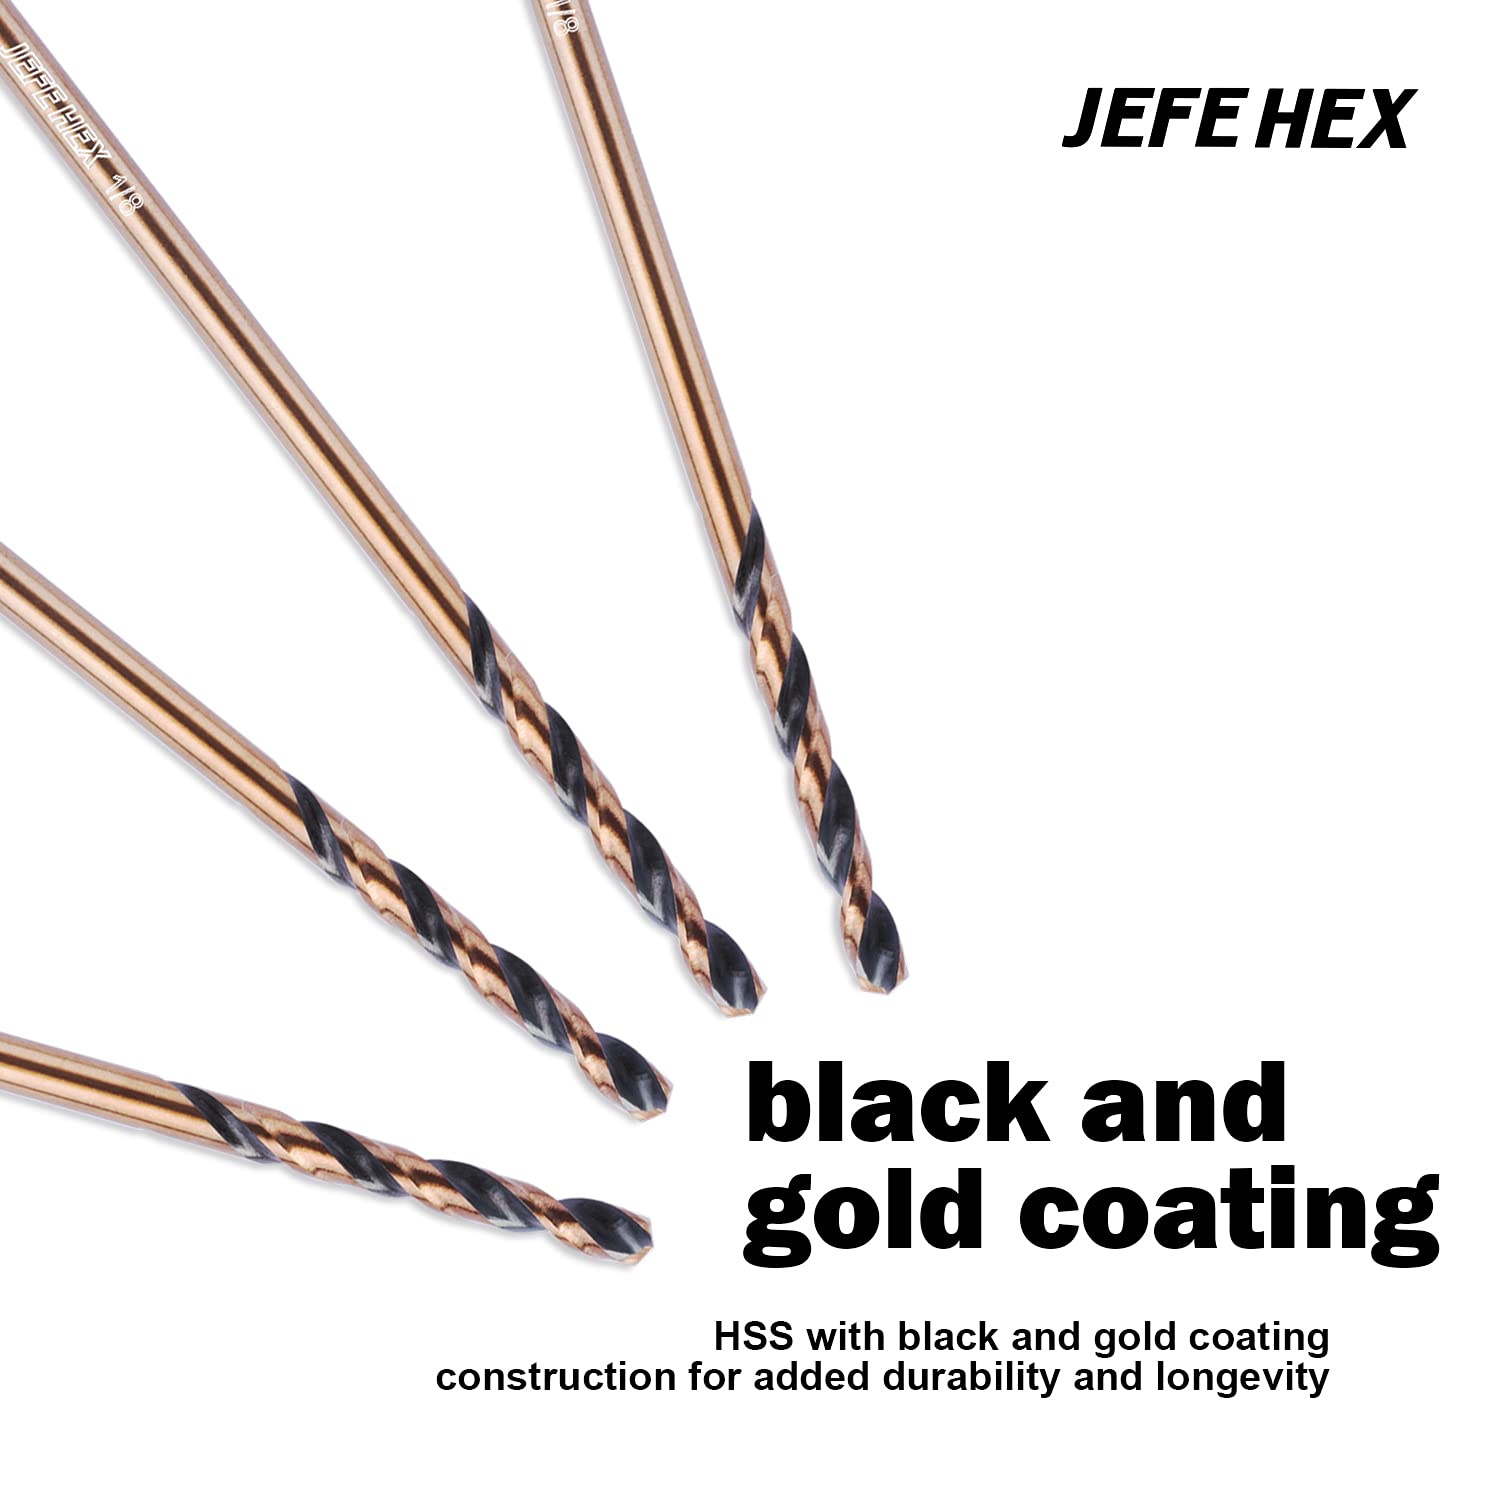 JEFE HEX 1/8" HSS Twist Drill Bit for Steel/Copper/Aluminum/Zinc Alloy/Wood/Plastics, General Purpose HSS Drill bit, 135 Degree Split Point, Ideal for DIY Projects and Home Maintenance. (6-Piece)